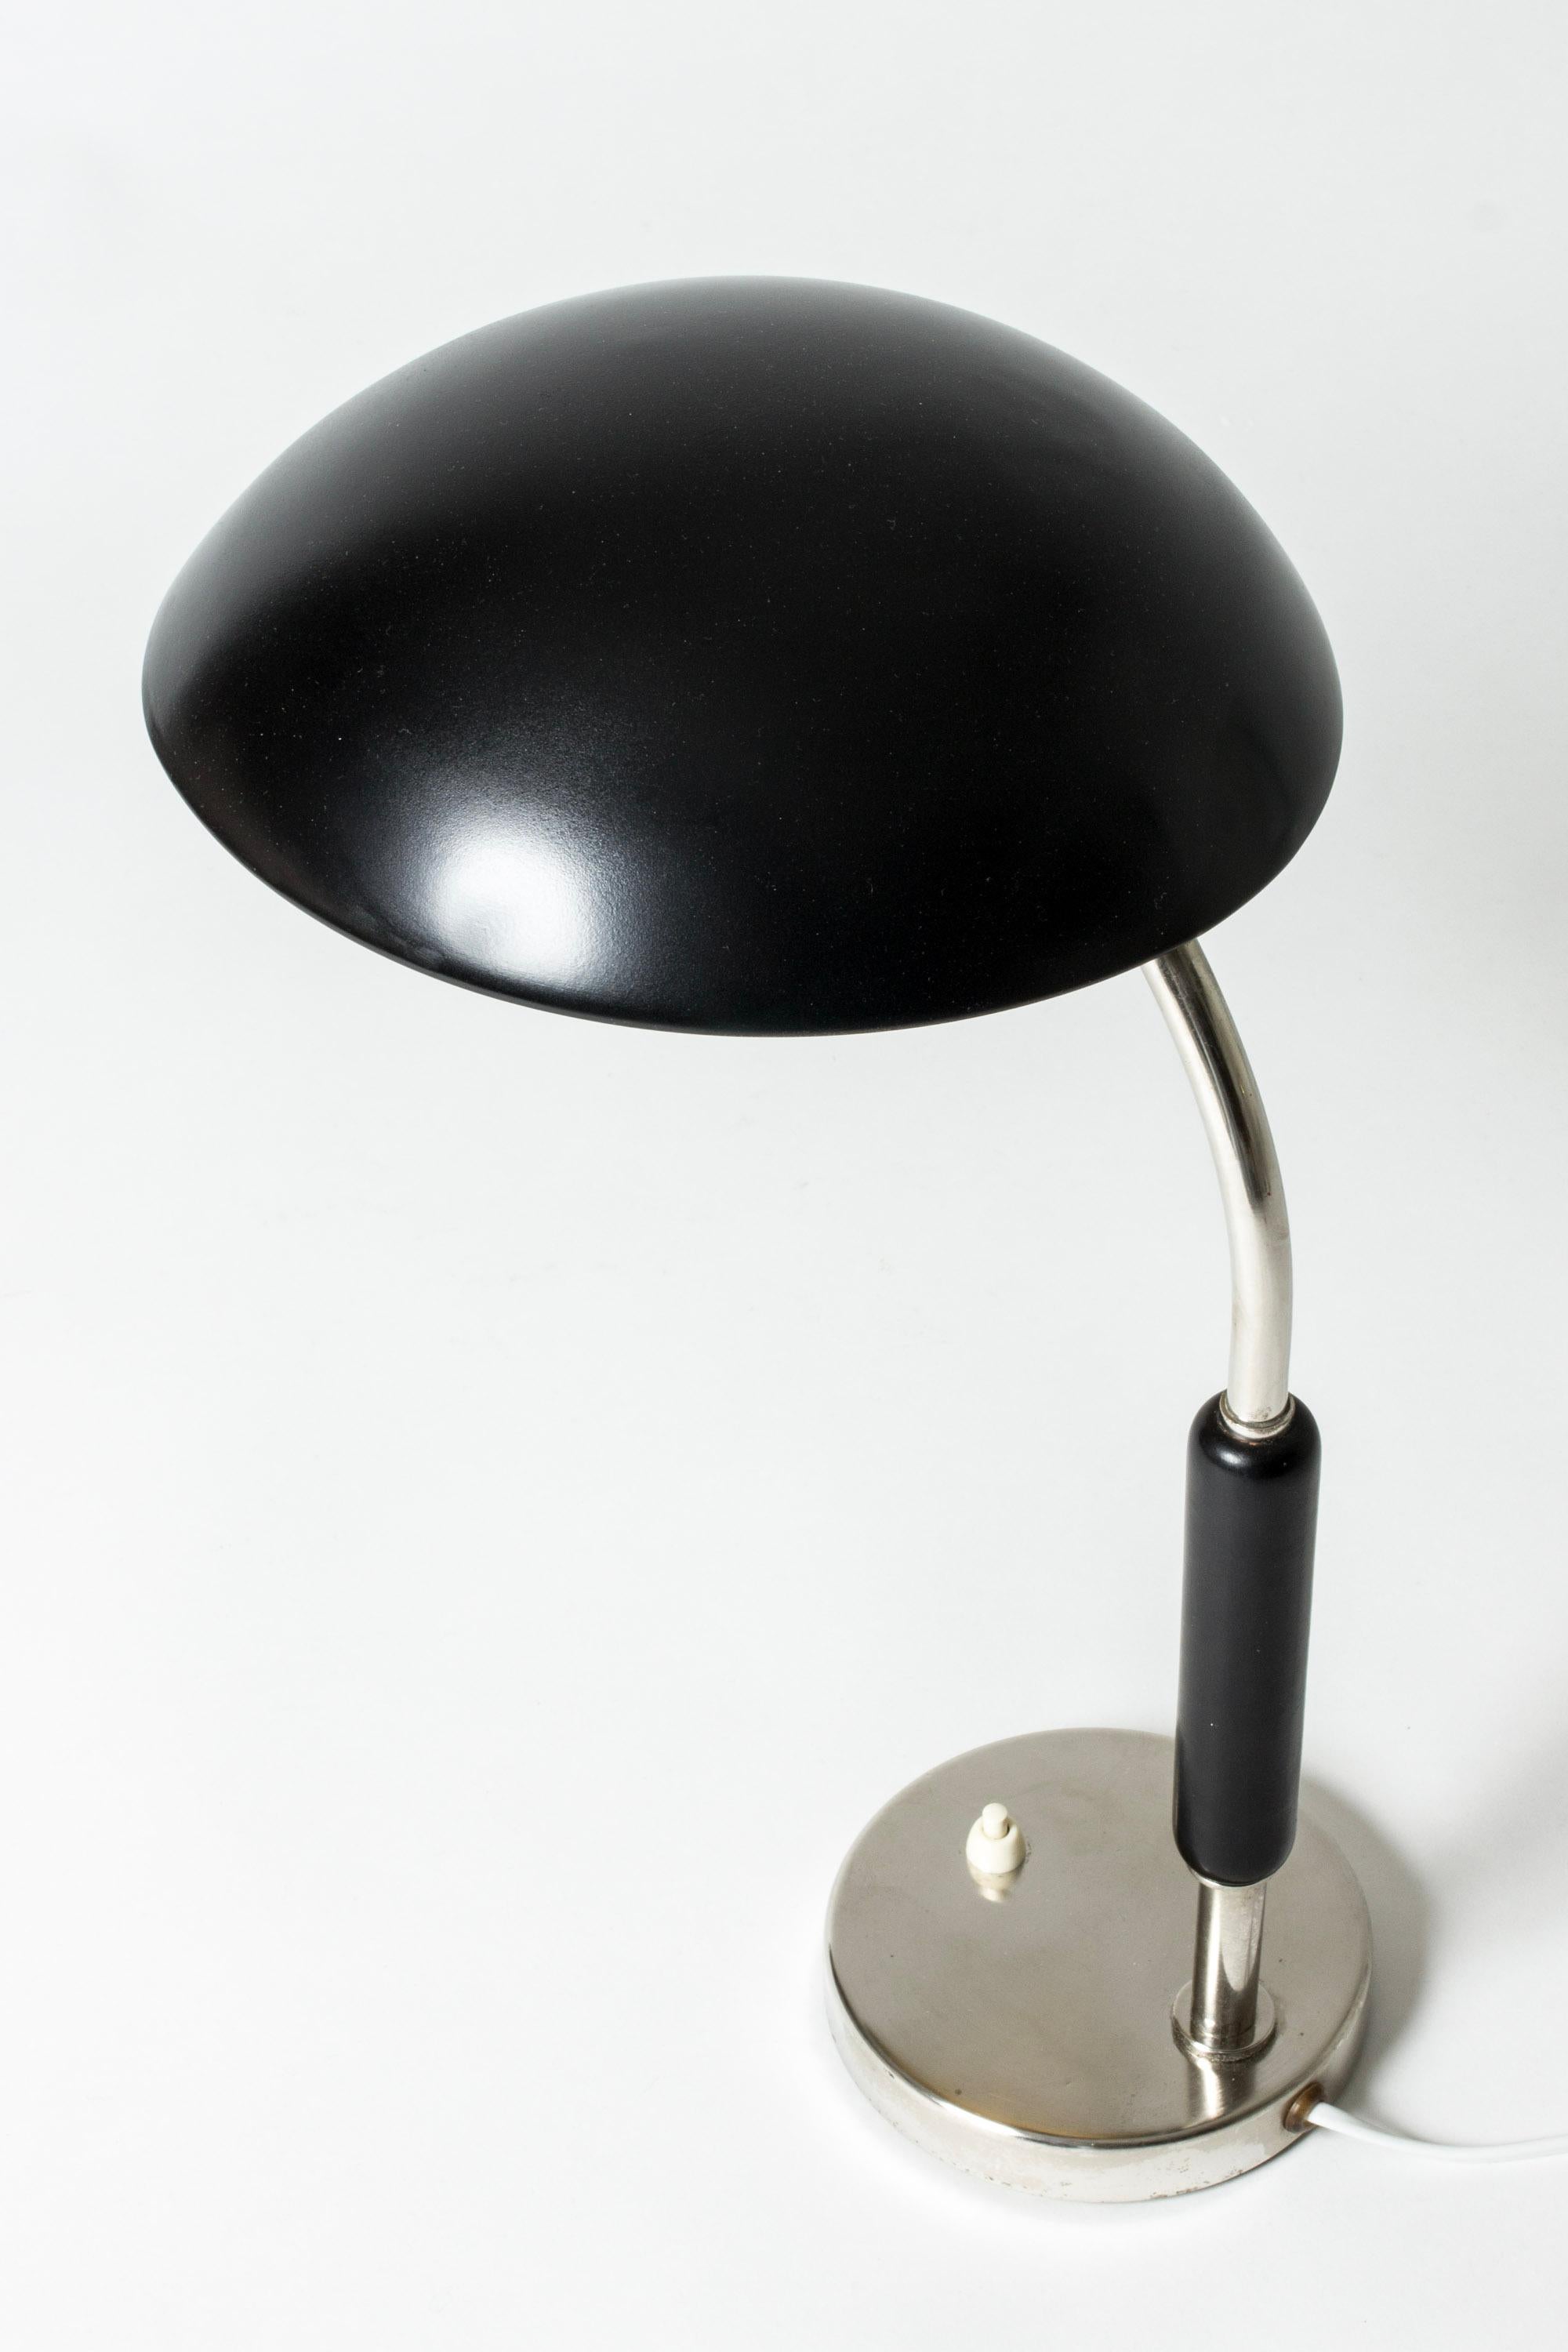 Scandinavian Modern Vintage Functionalist Table or Desk Lamp from ASEA, Sweden, 1930s For Sale